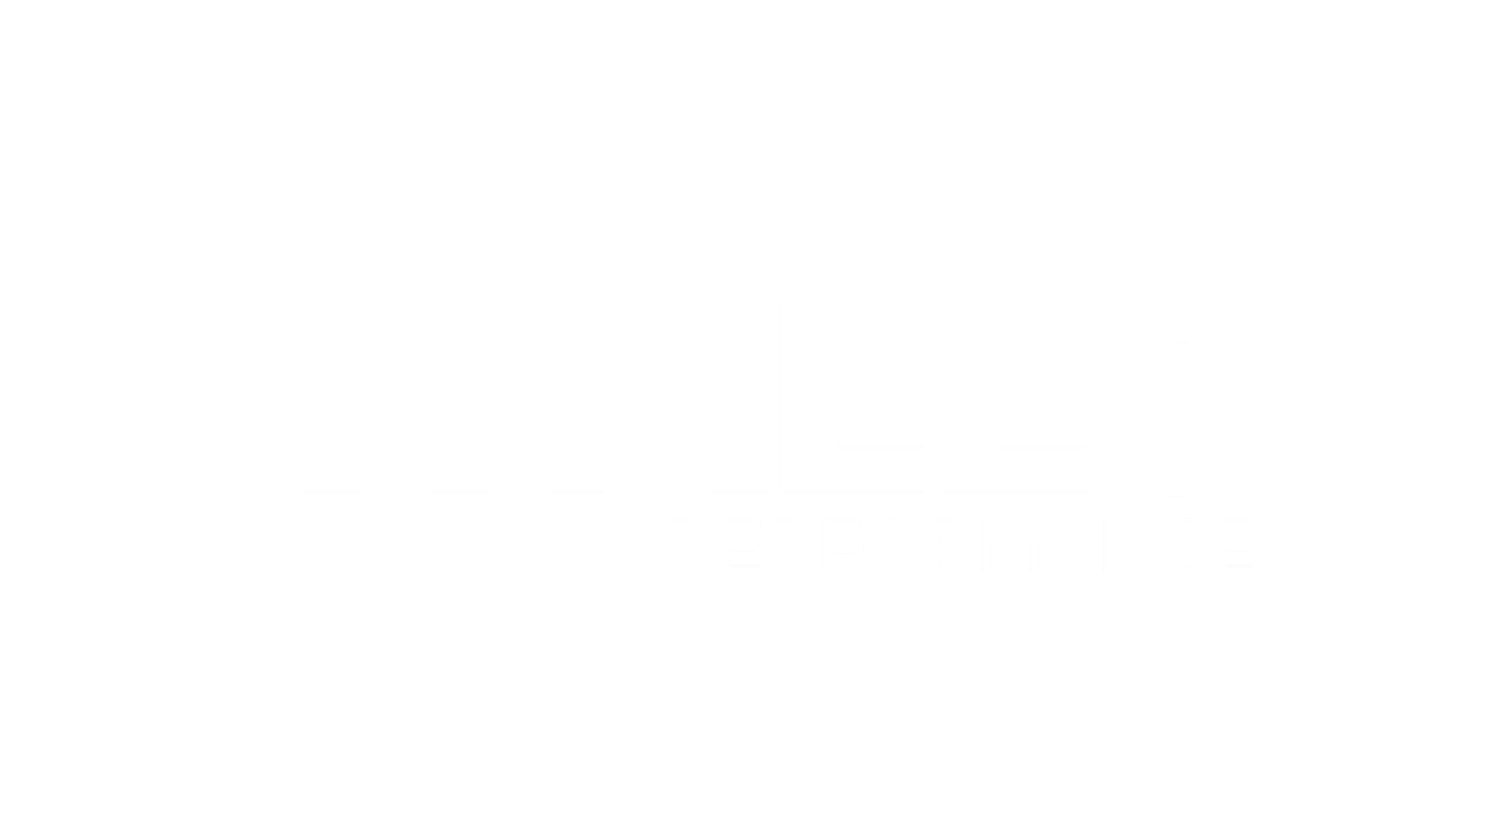 Walls Performance